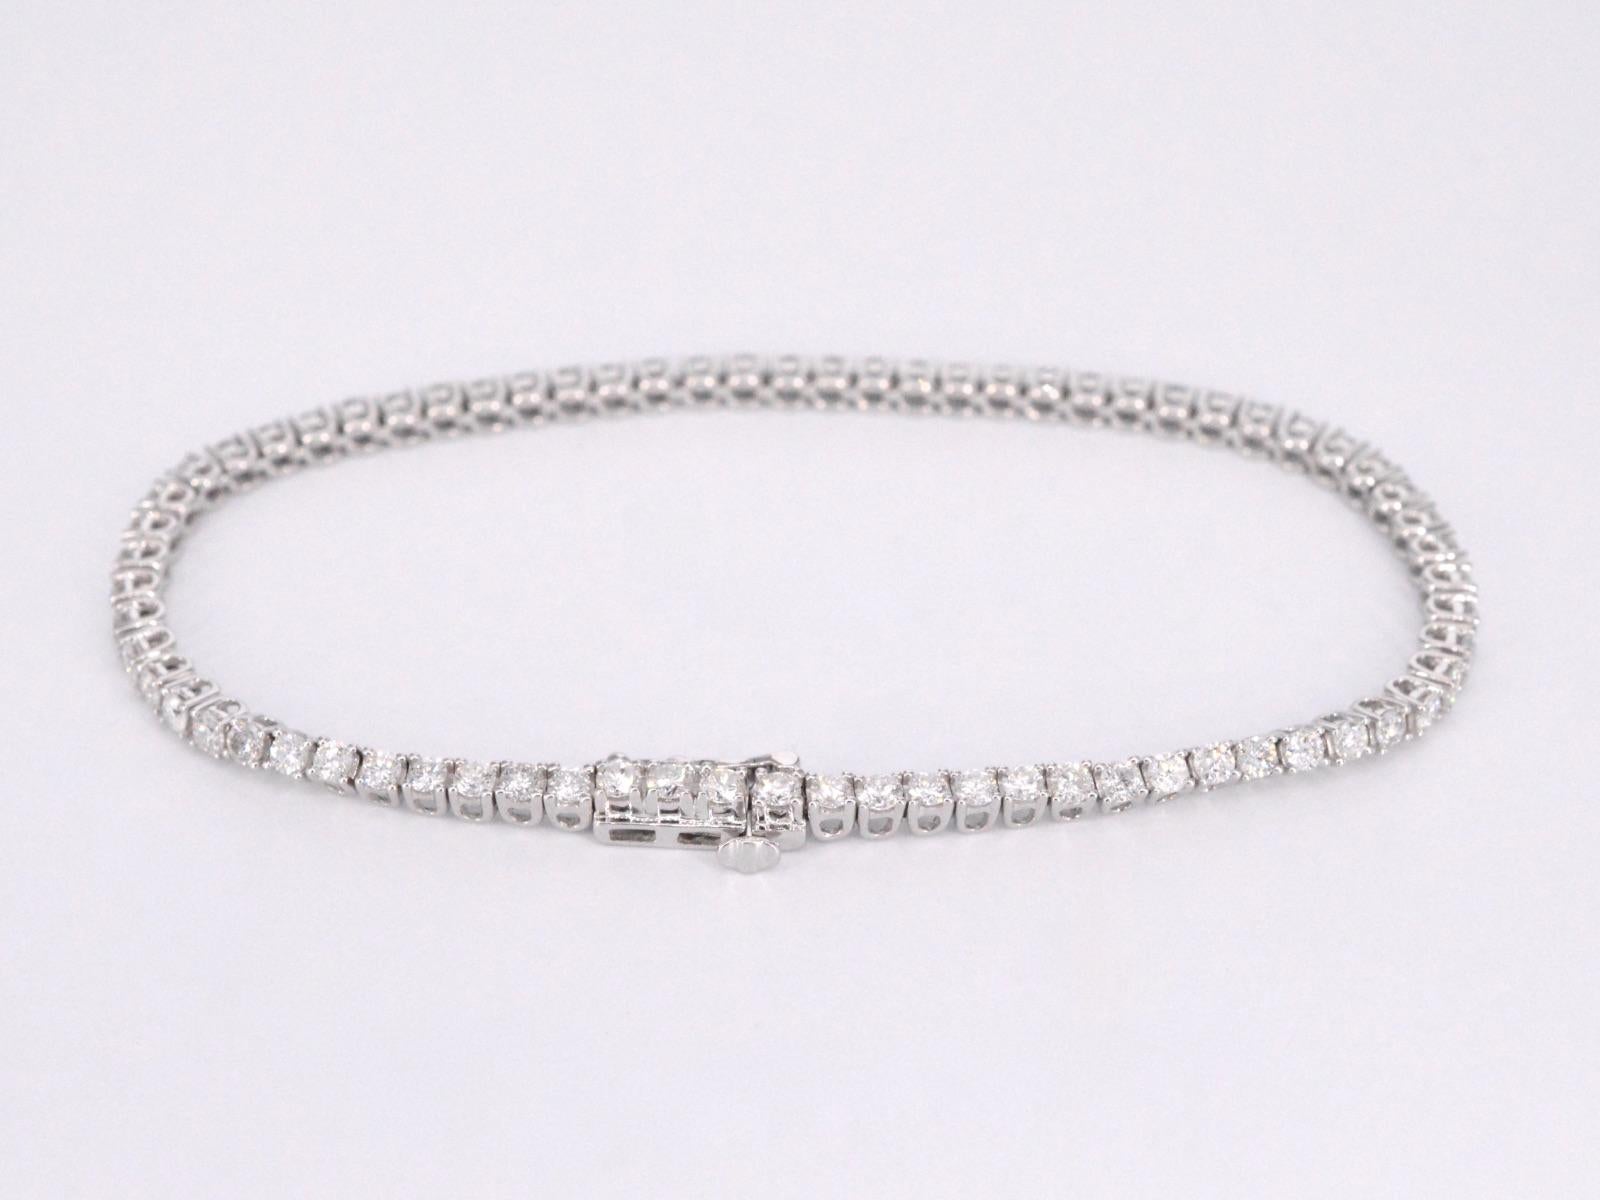 Contemporary White gold tennis bracelet with diamonds 3.50 carat